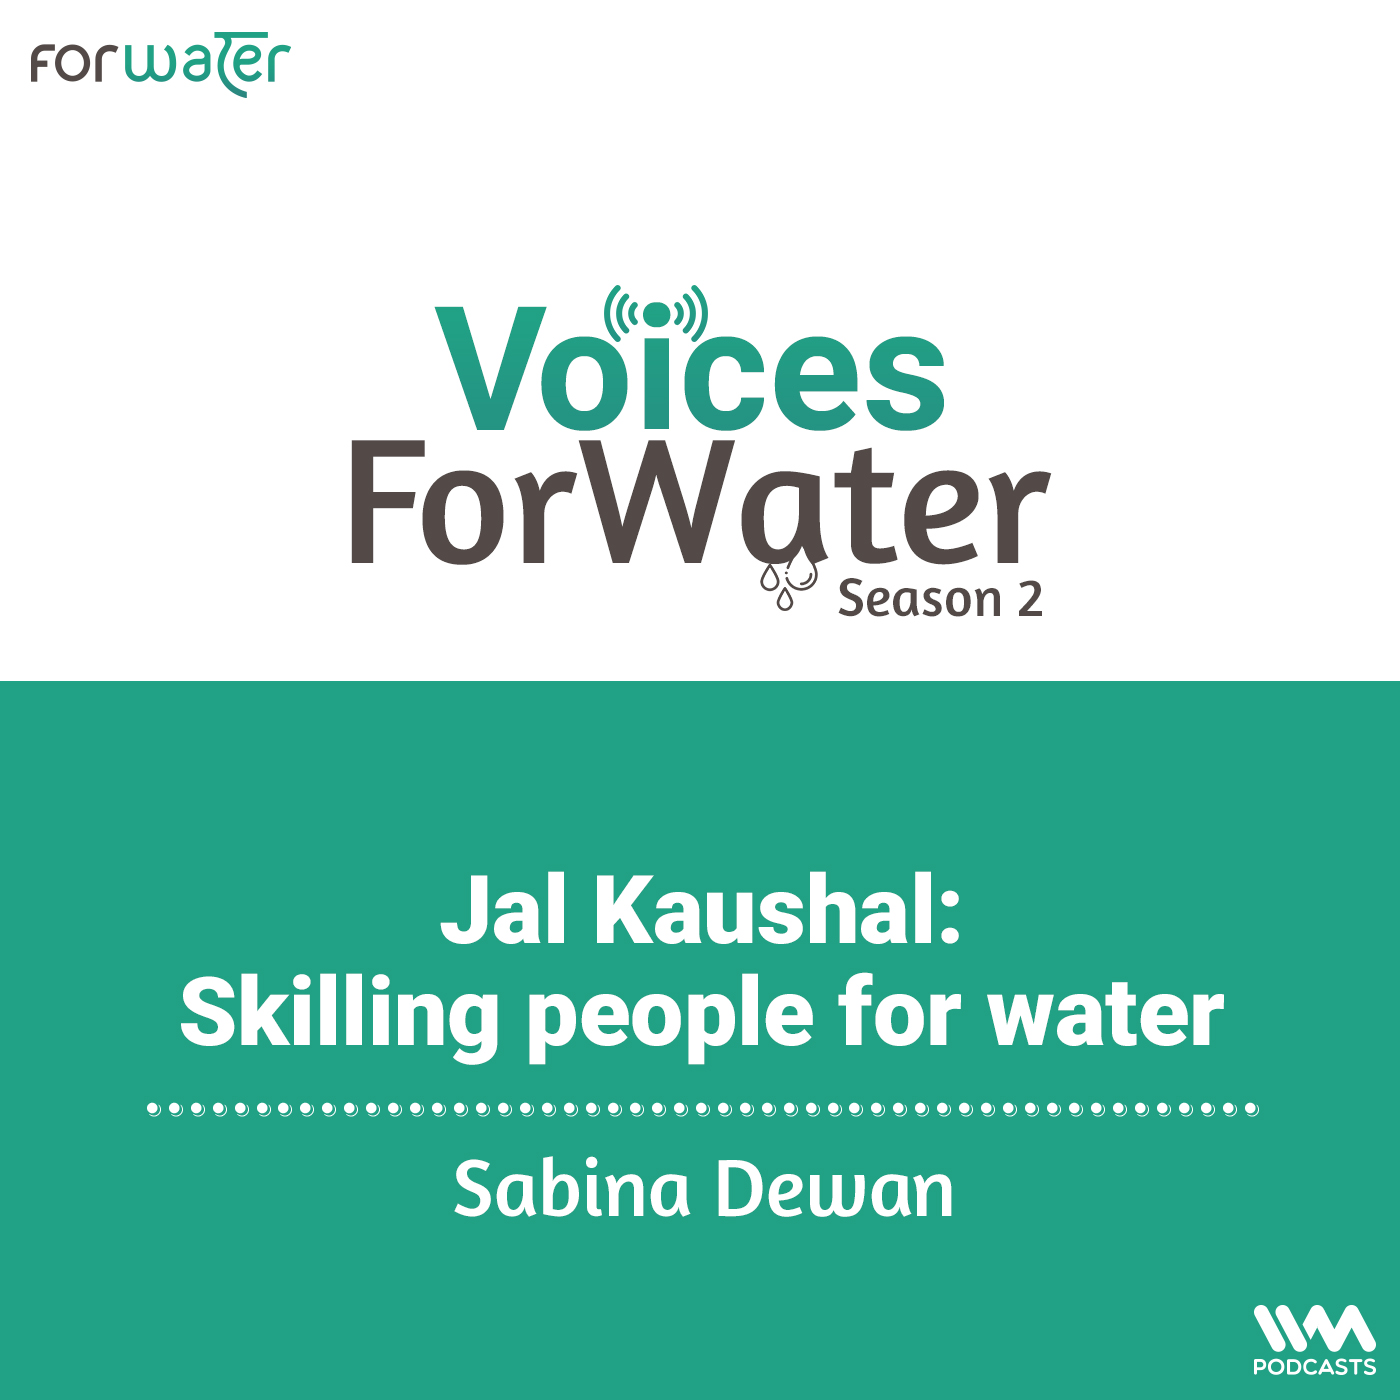 Jal Kaushal: Skilling people for Water Ft. Sabina Dewan